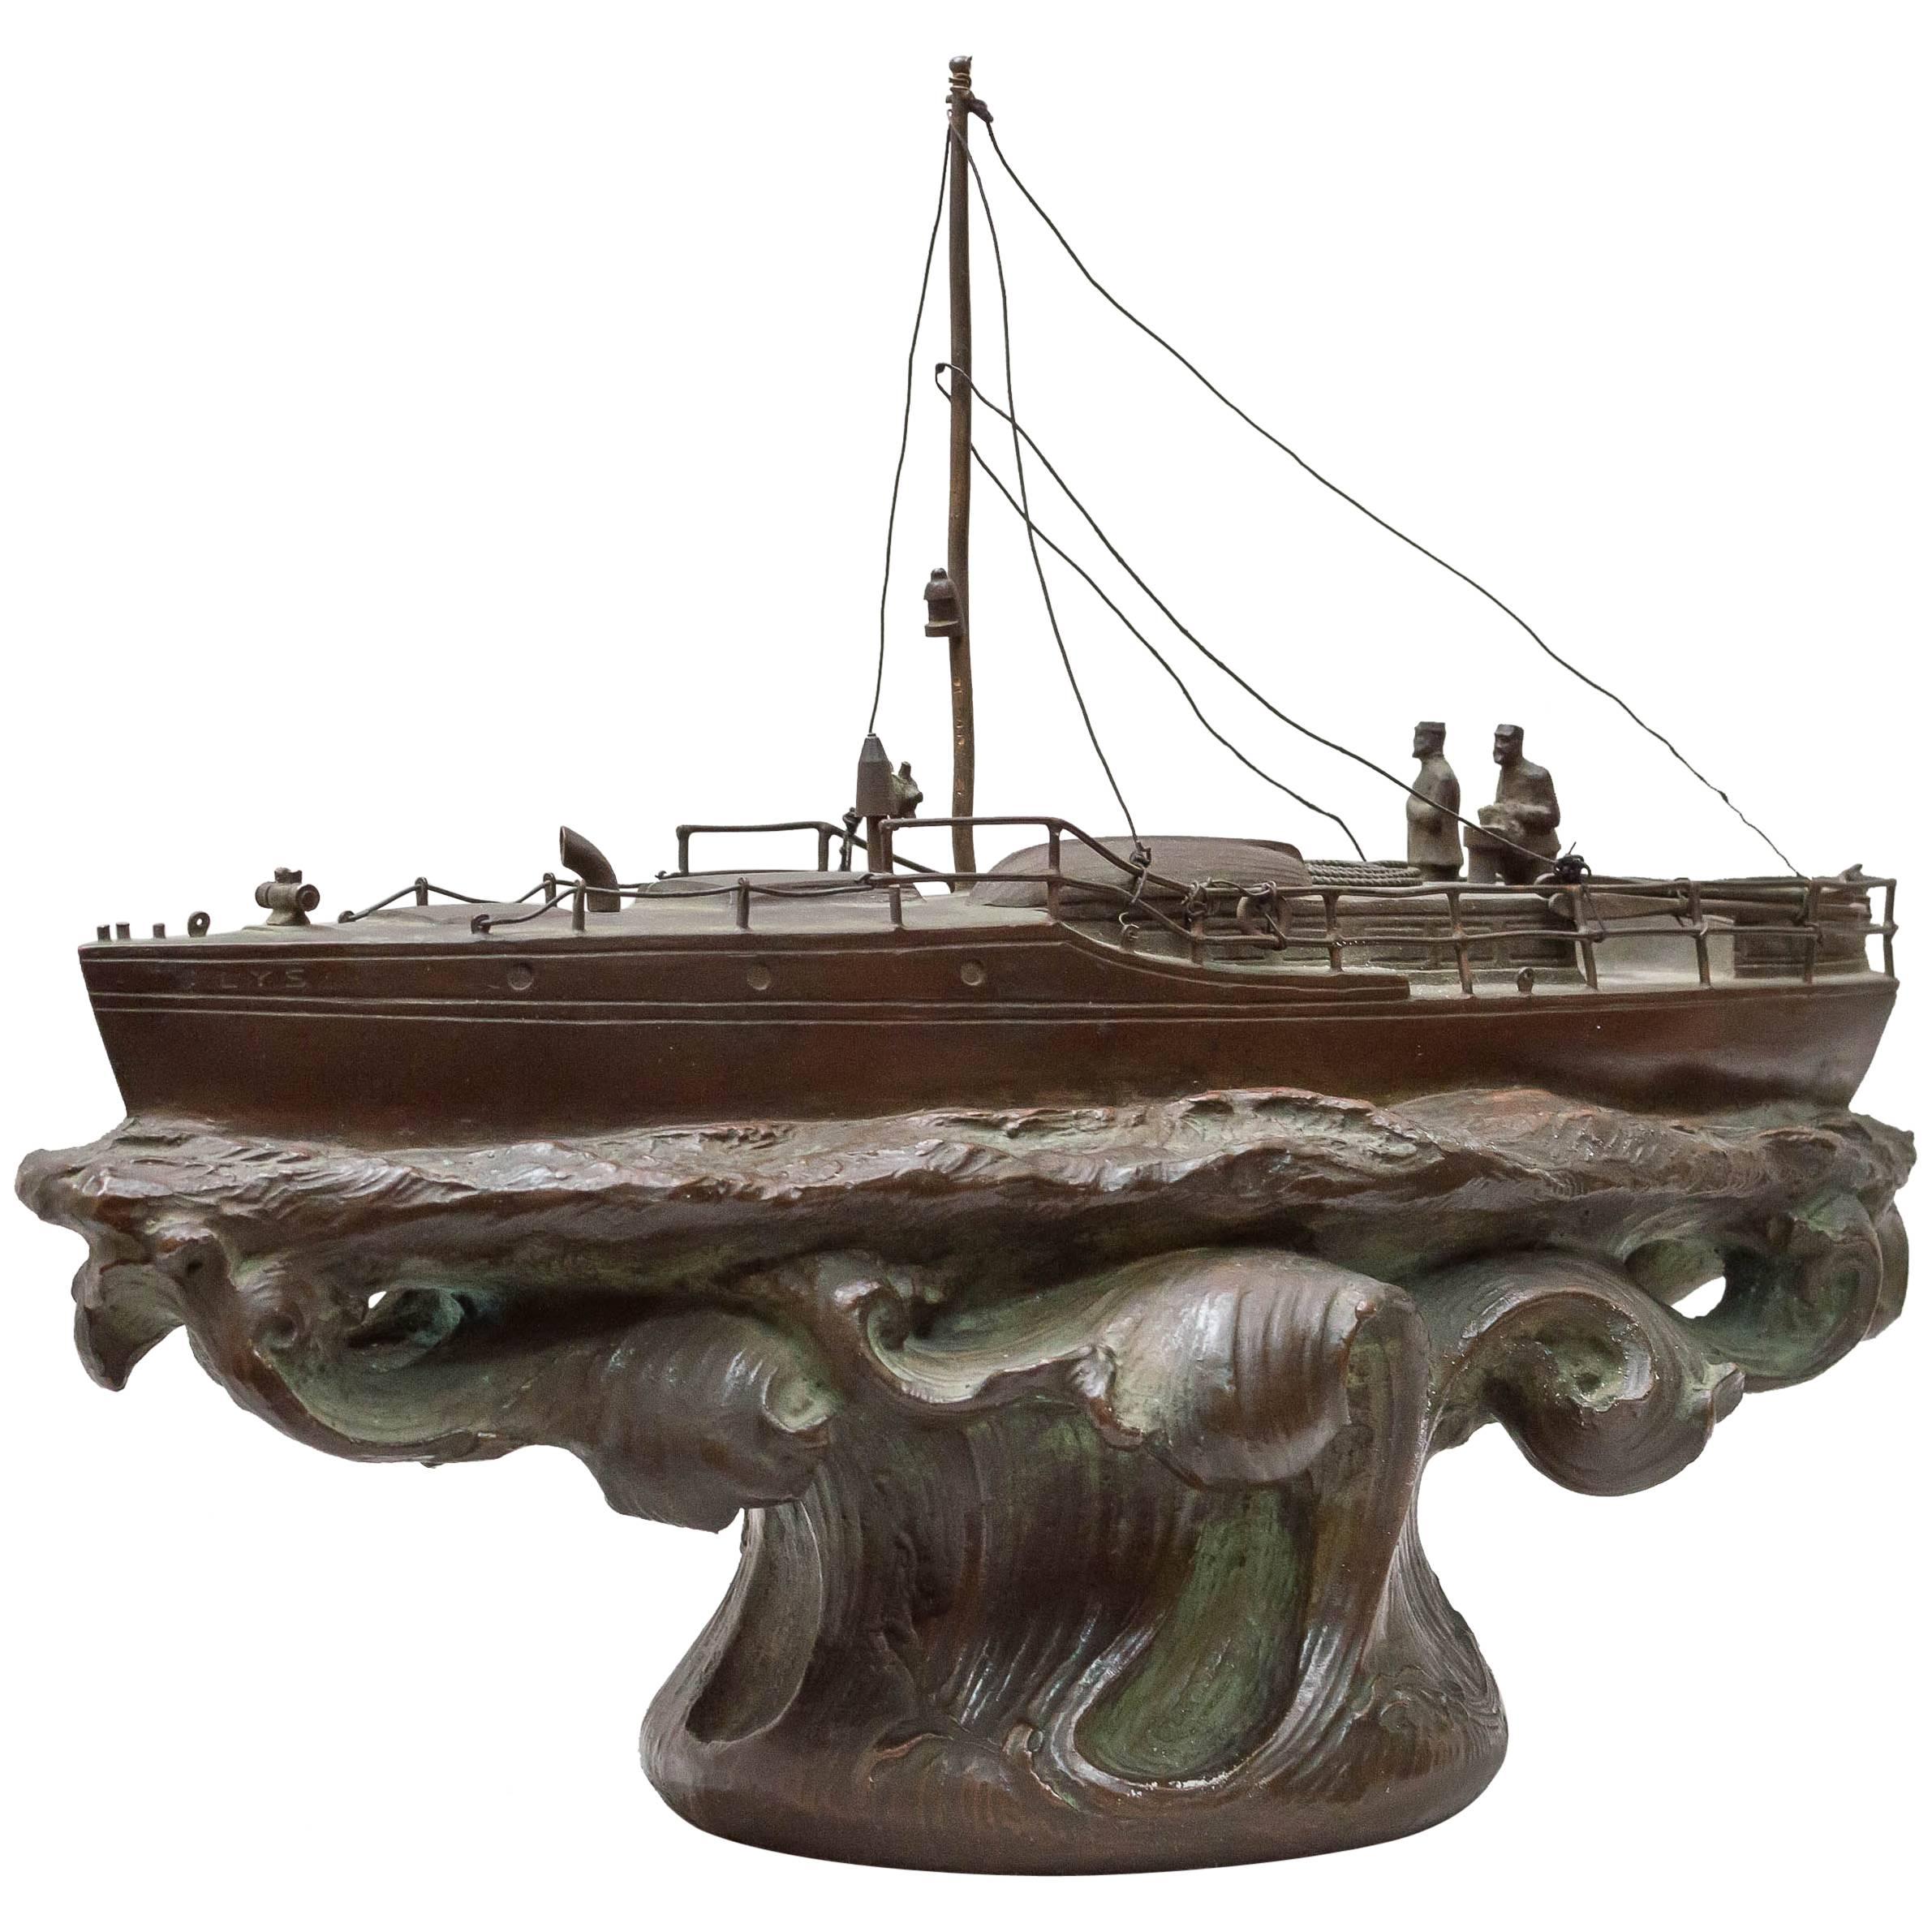 American Bronze Racing Boat "Ilys" Winner of Many Races, circa 1900